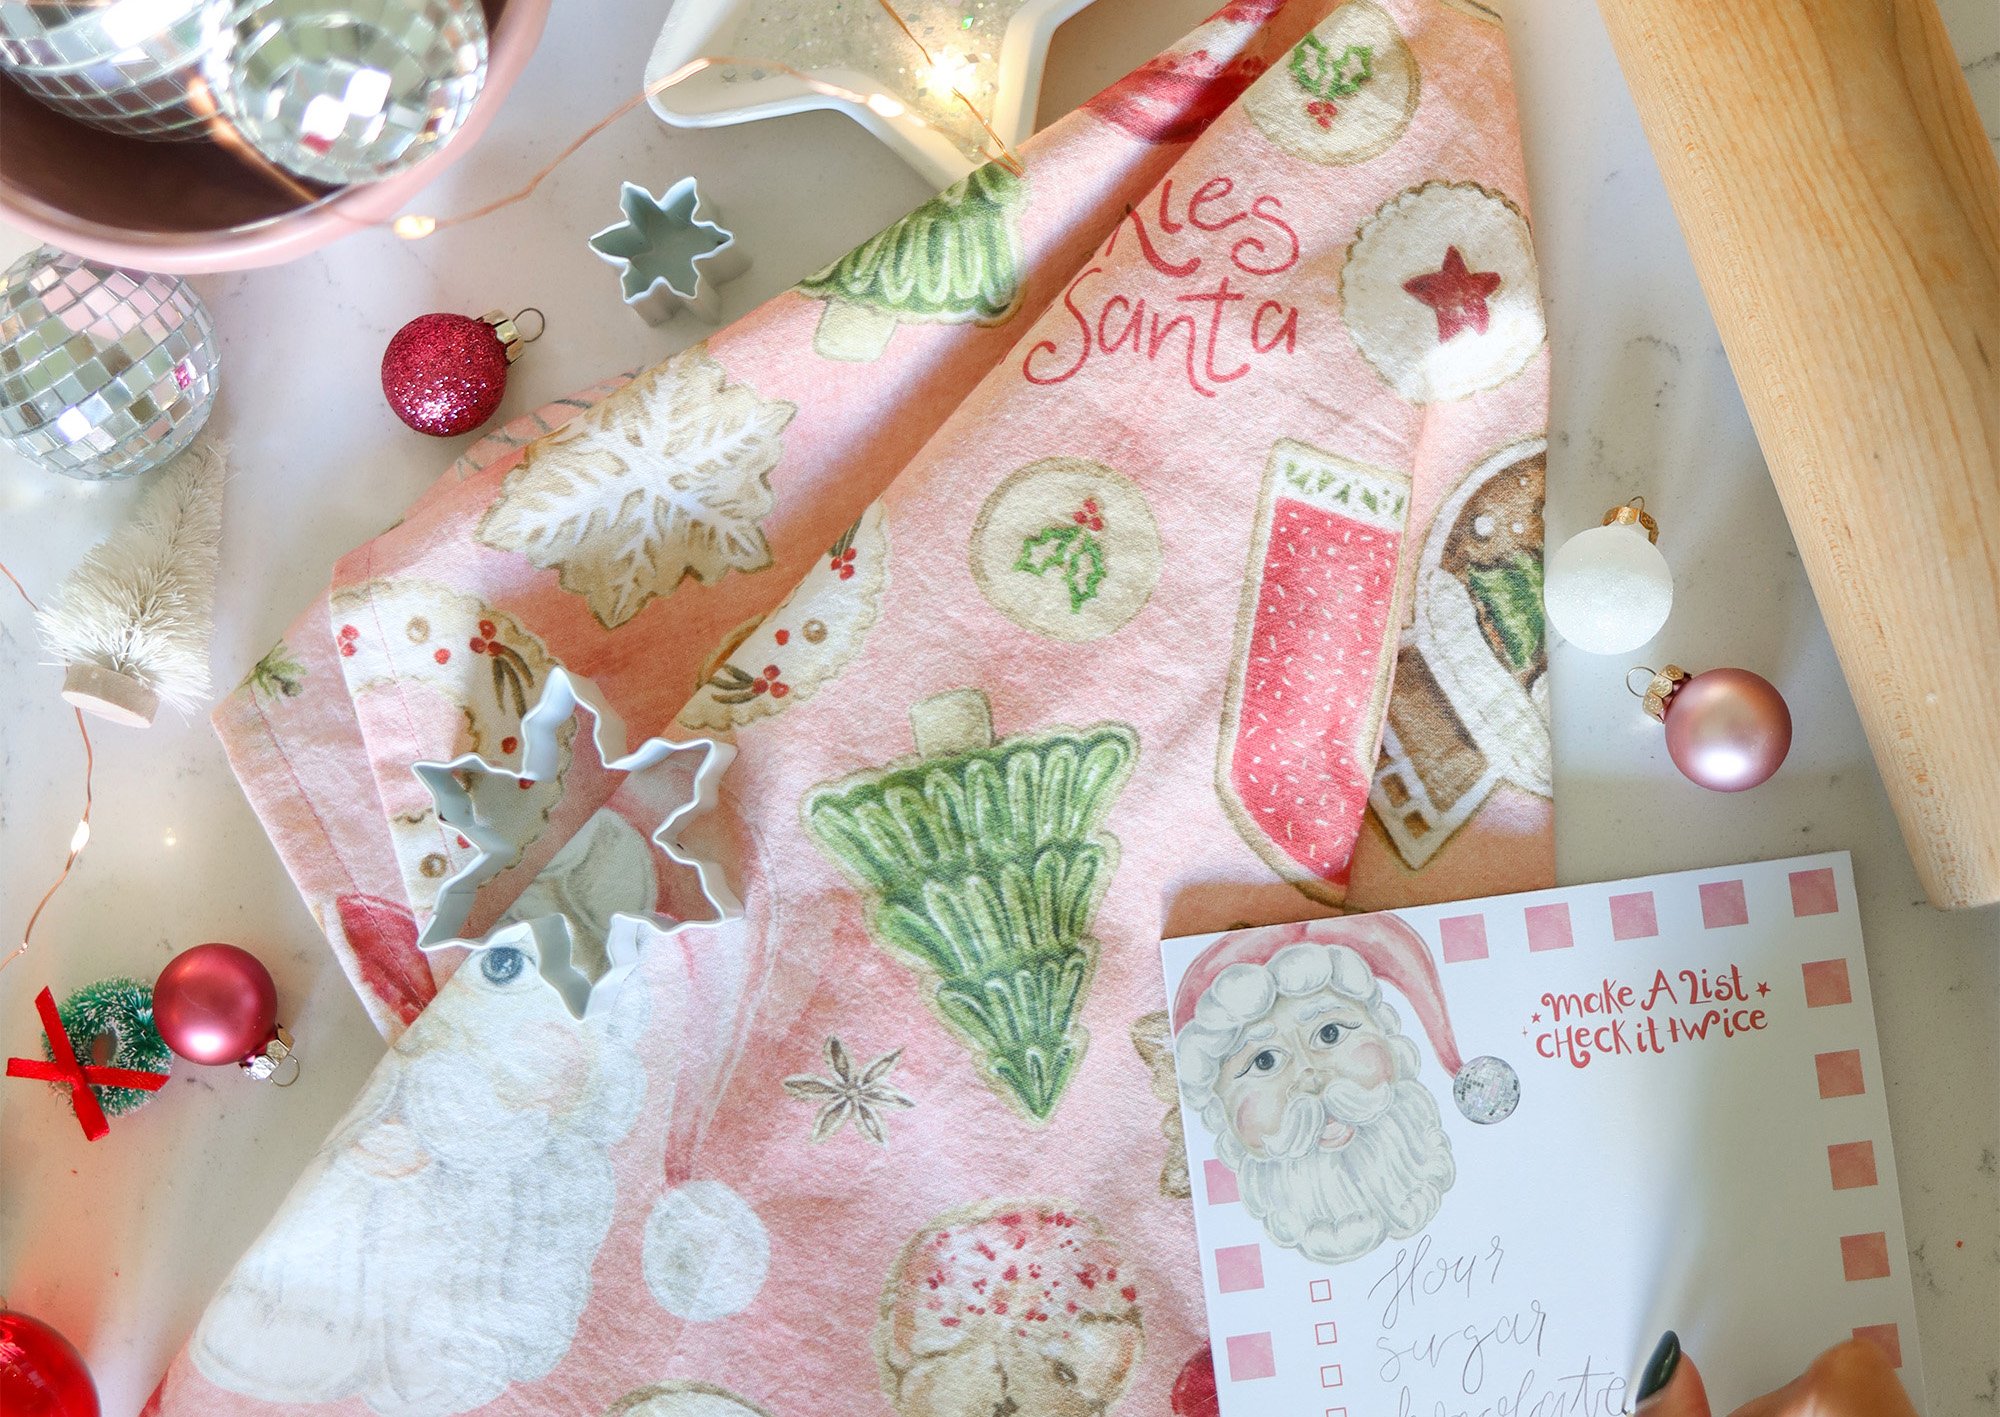 Disco Santa Christmas Wrapping Paper, Fun Novelty Gift Wrap, Secret Santa  Present Wrapping Paper, Christmas Party Gift Wrap, Fun Cool Funky 